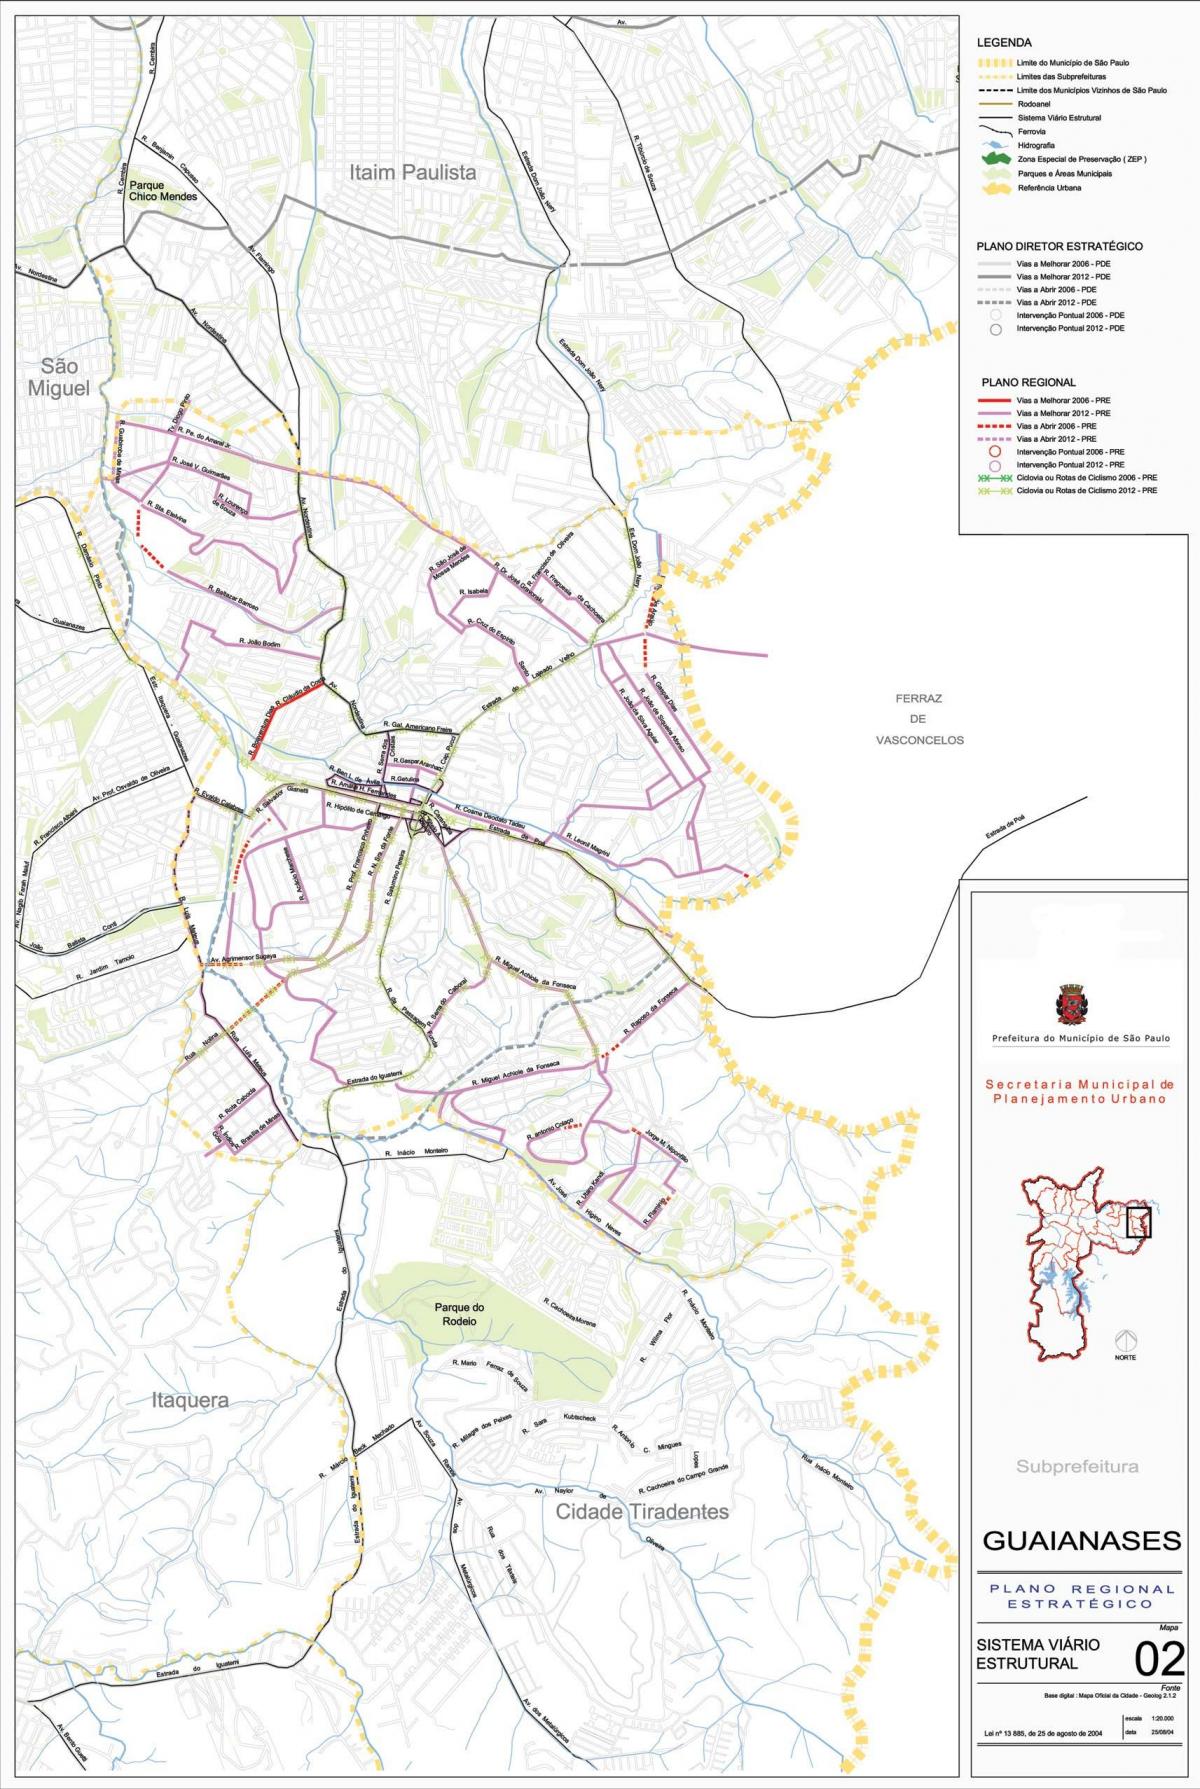 Karta Guaianases Sao Paulo - cesta